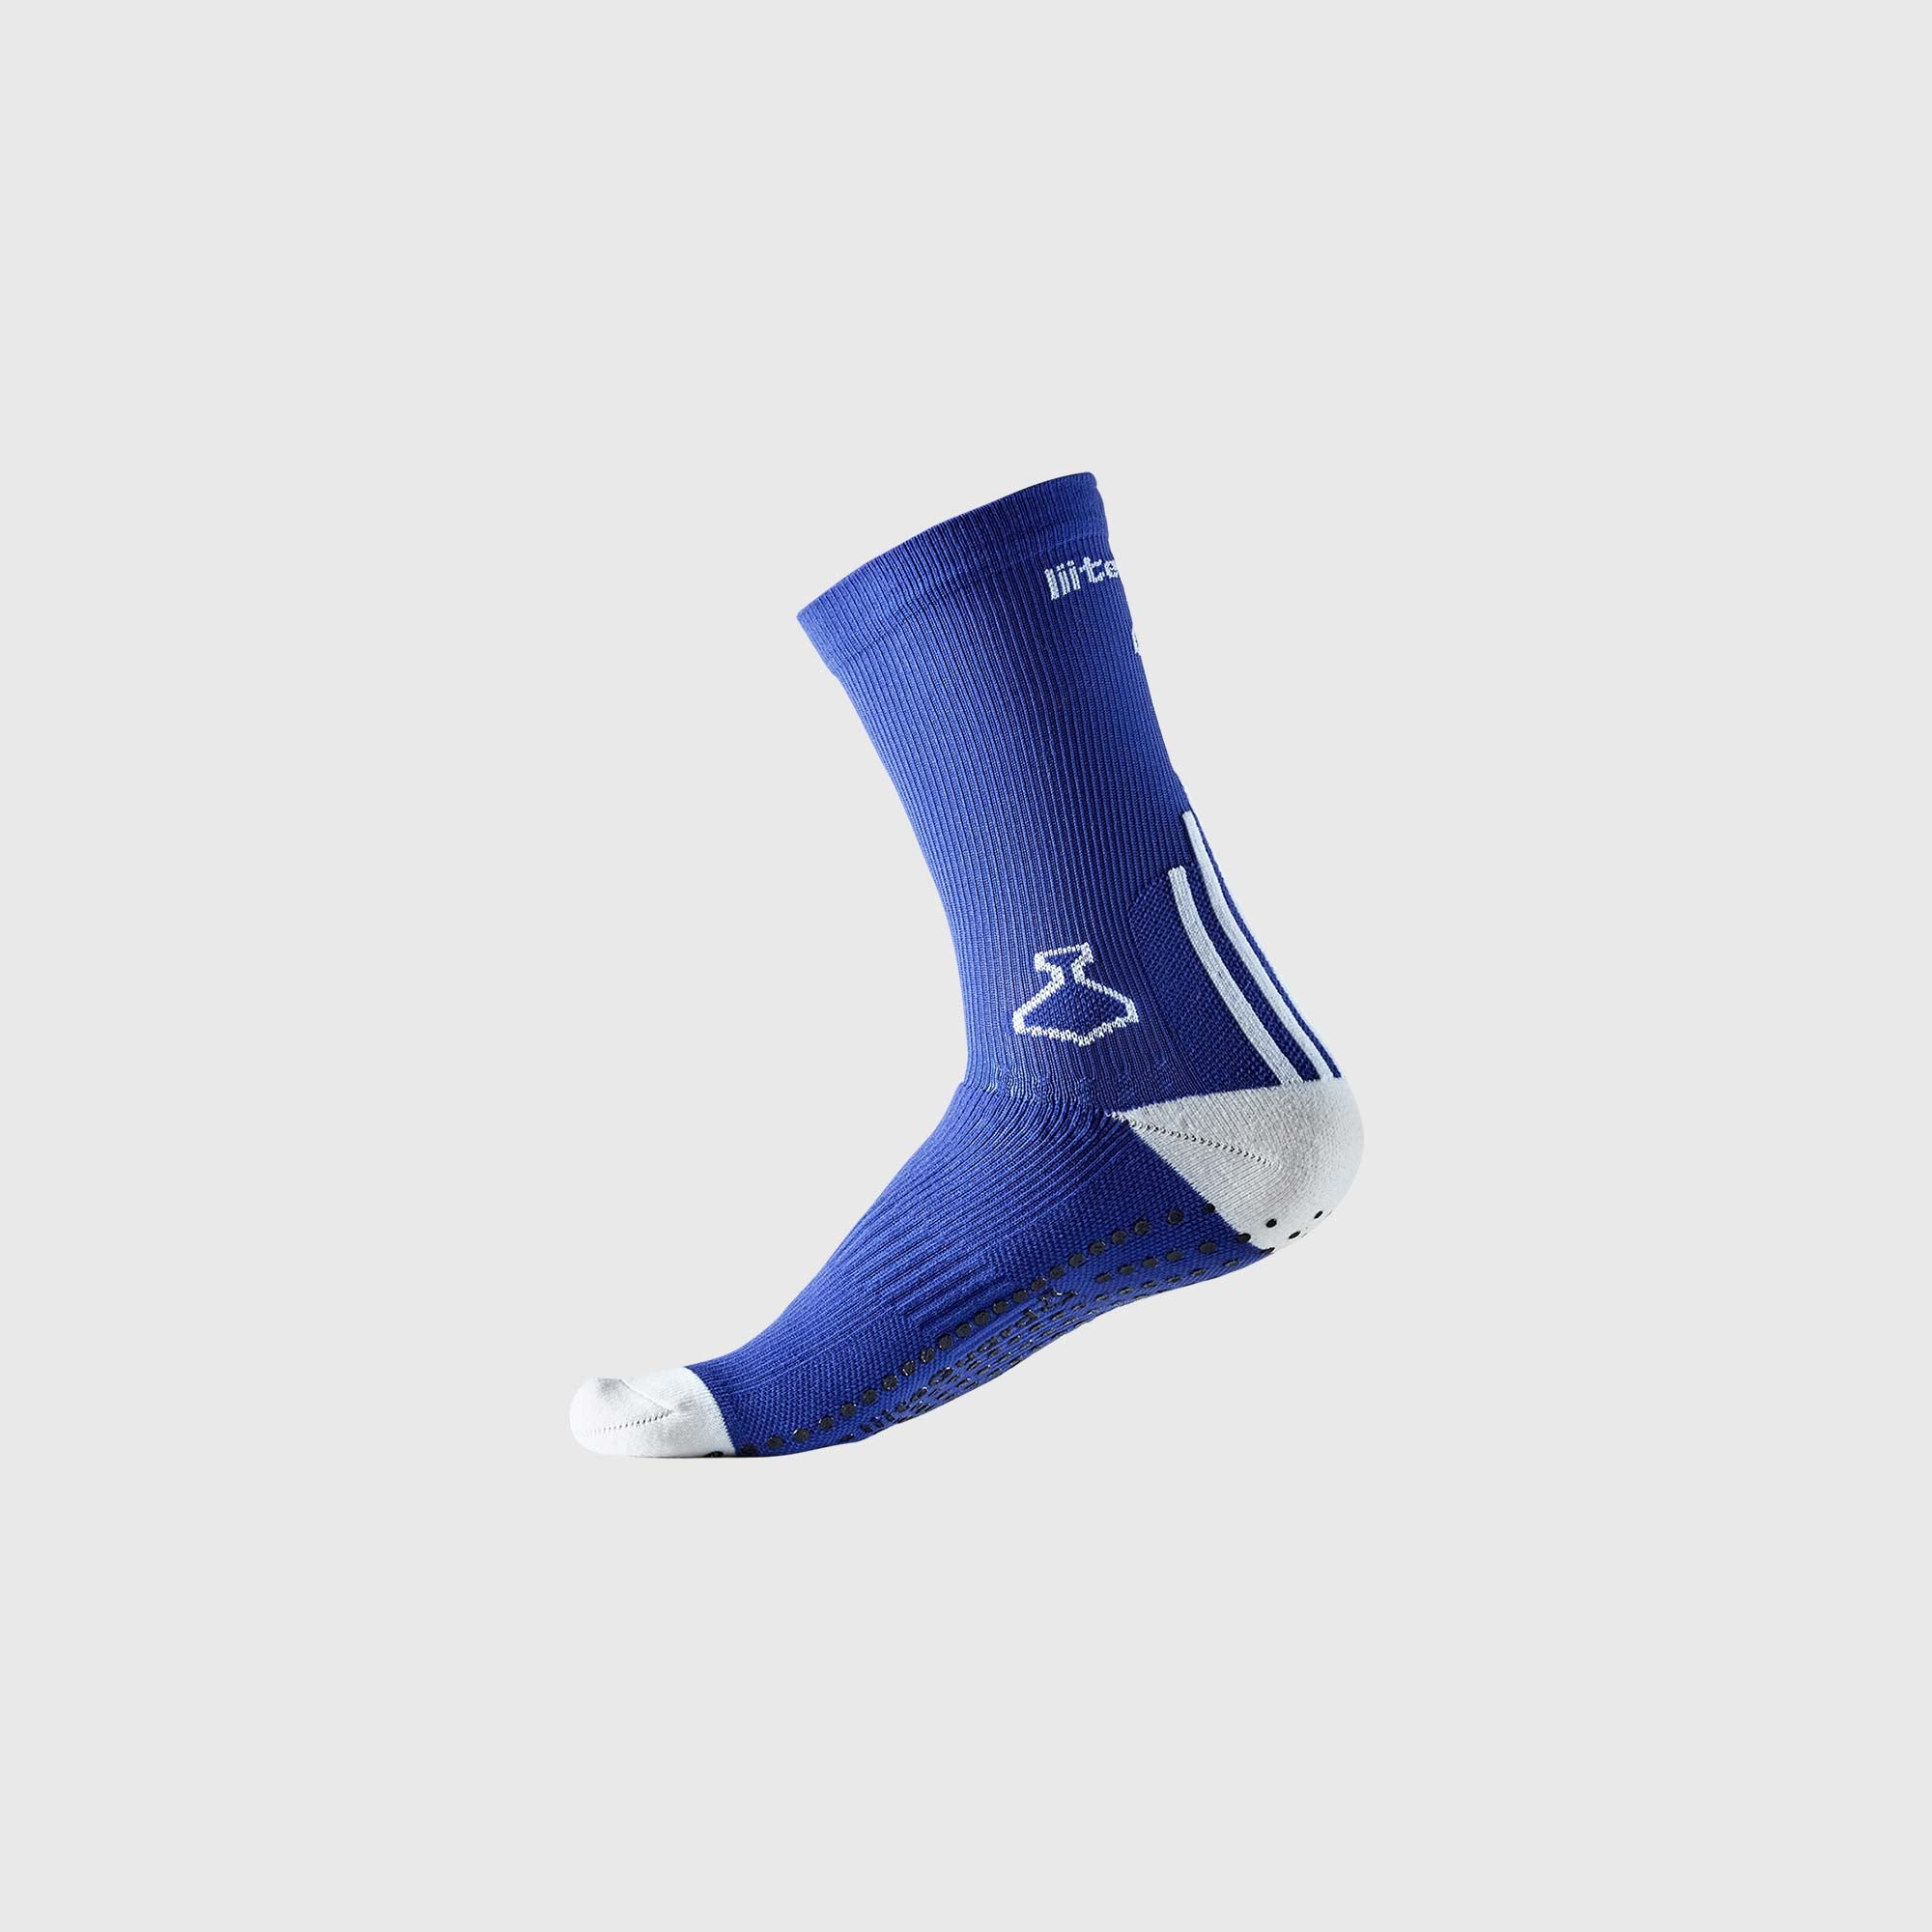 Liiteguard PRO-TECH Medium socks BLUE